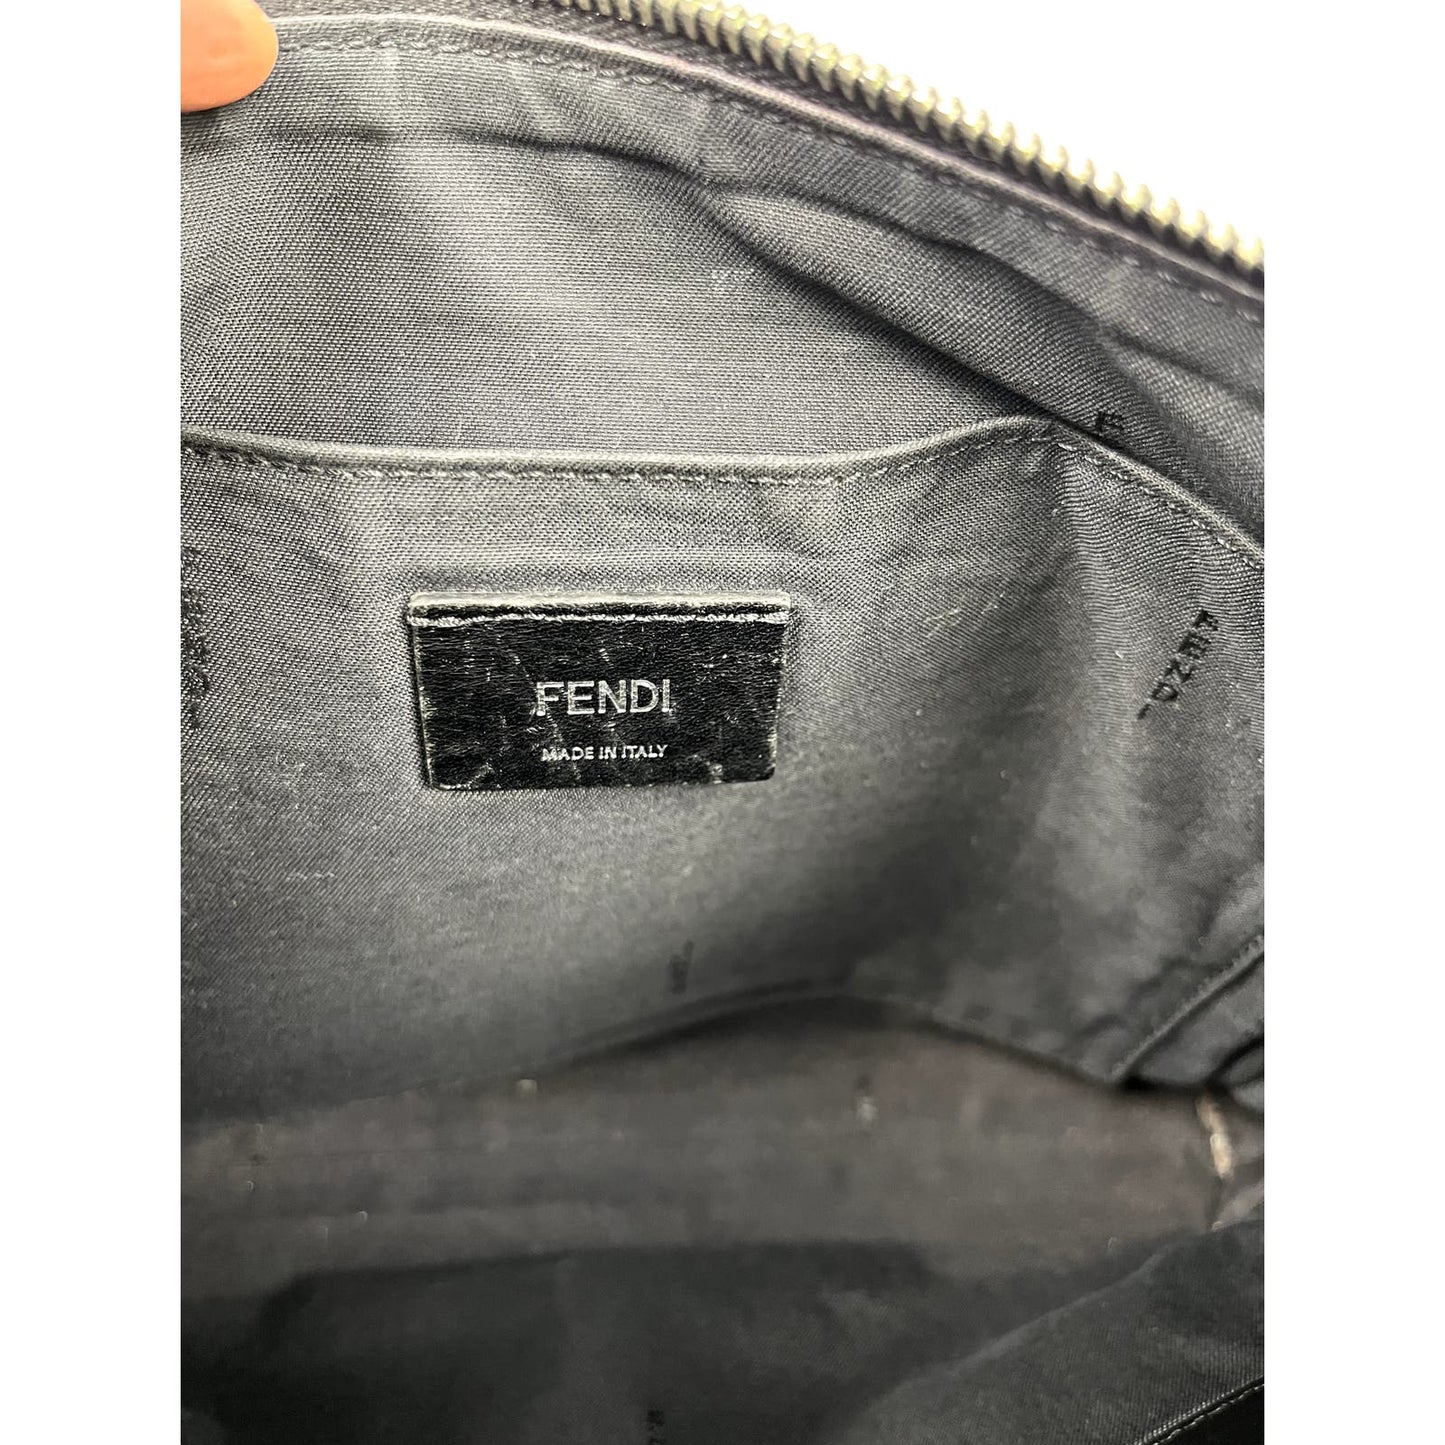 Fendi Nero/Sunflower Monster Bad Bug Leather Clutch Bag